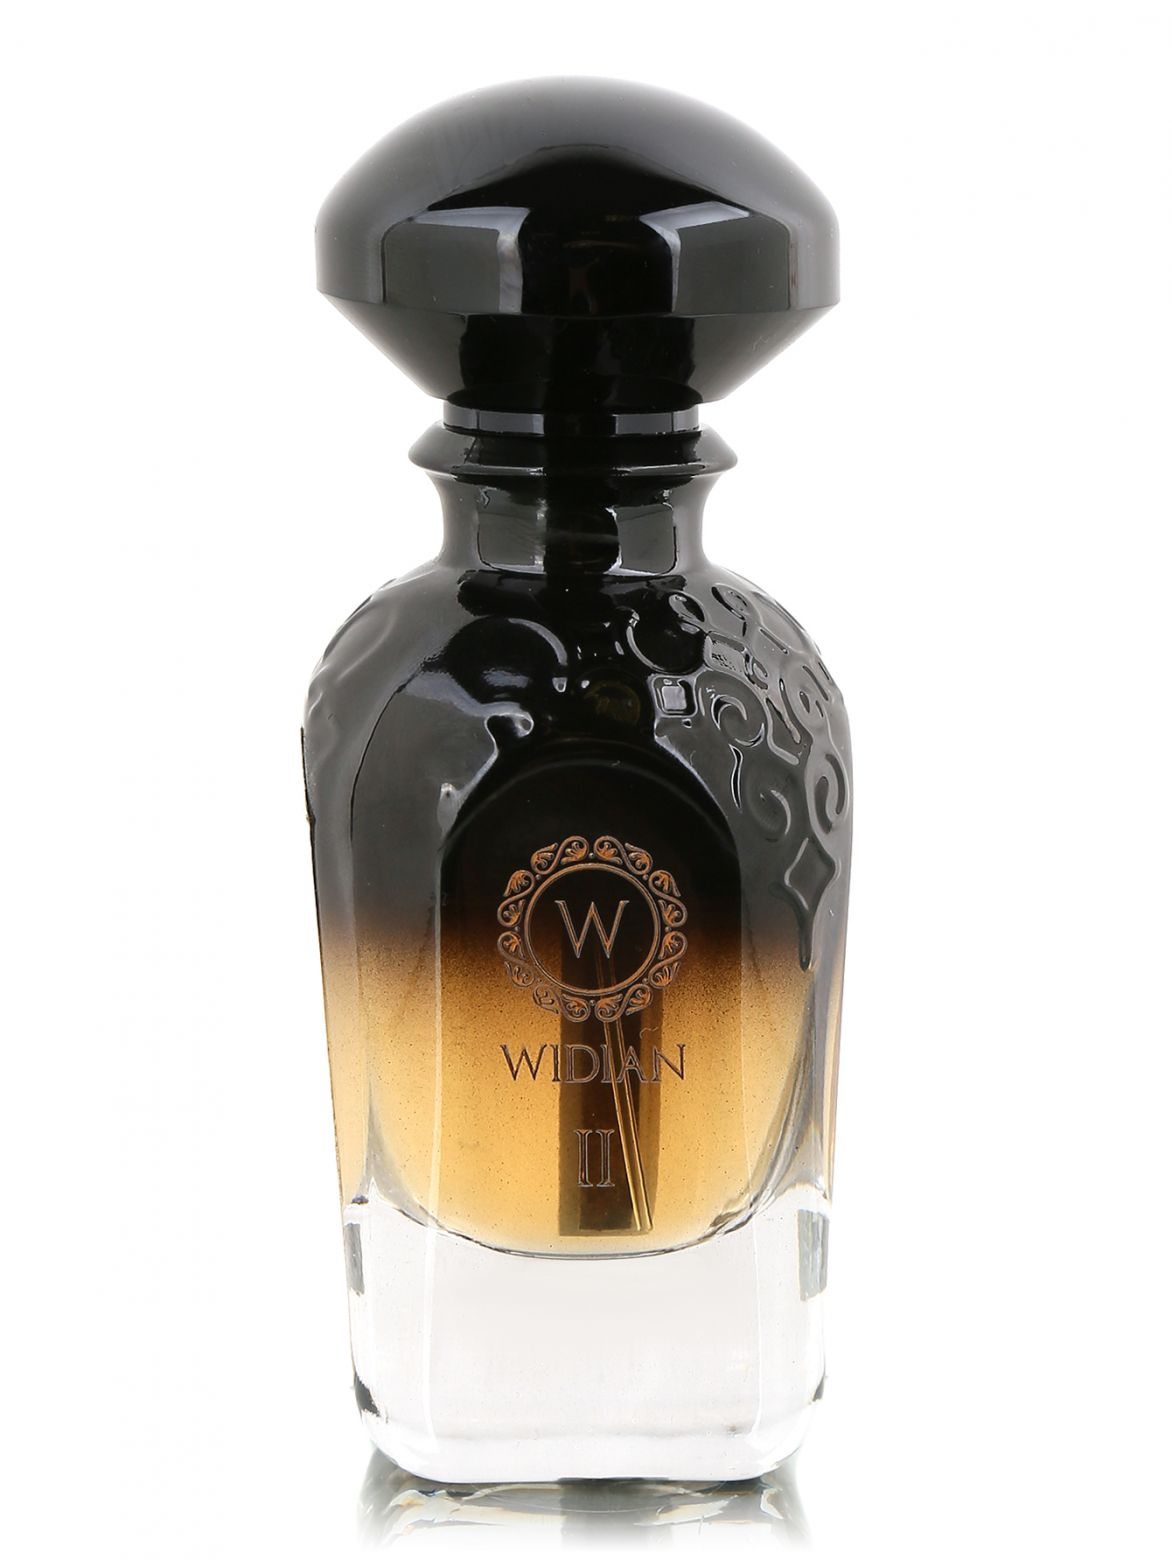 Arabia 2. AJ Arabia Widian Black 2 Parfum 50ml. Духи Widian AJ Arabia 2. AJ Arabia Widian Black III parfume 50ml. AJ Arabia Widian Black collection II Parfum.